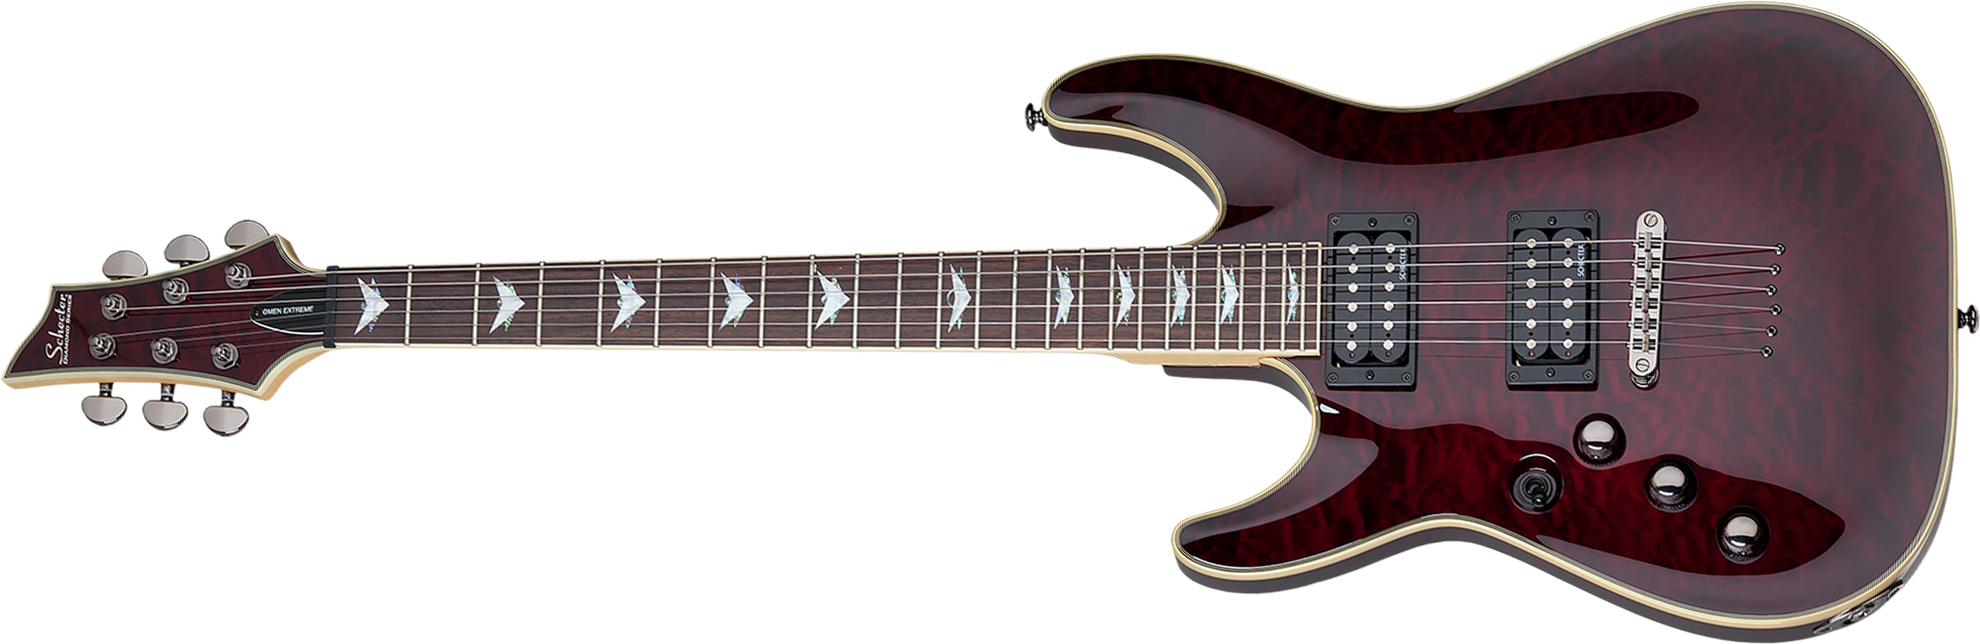 Schecter Omen Extreme-6 Lh Gaucher 2h Rw - Black Cherry - Left-handed electric guitar - Main picture